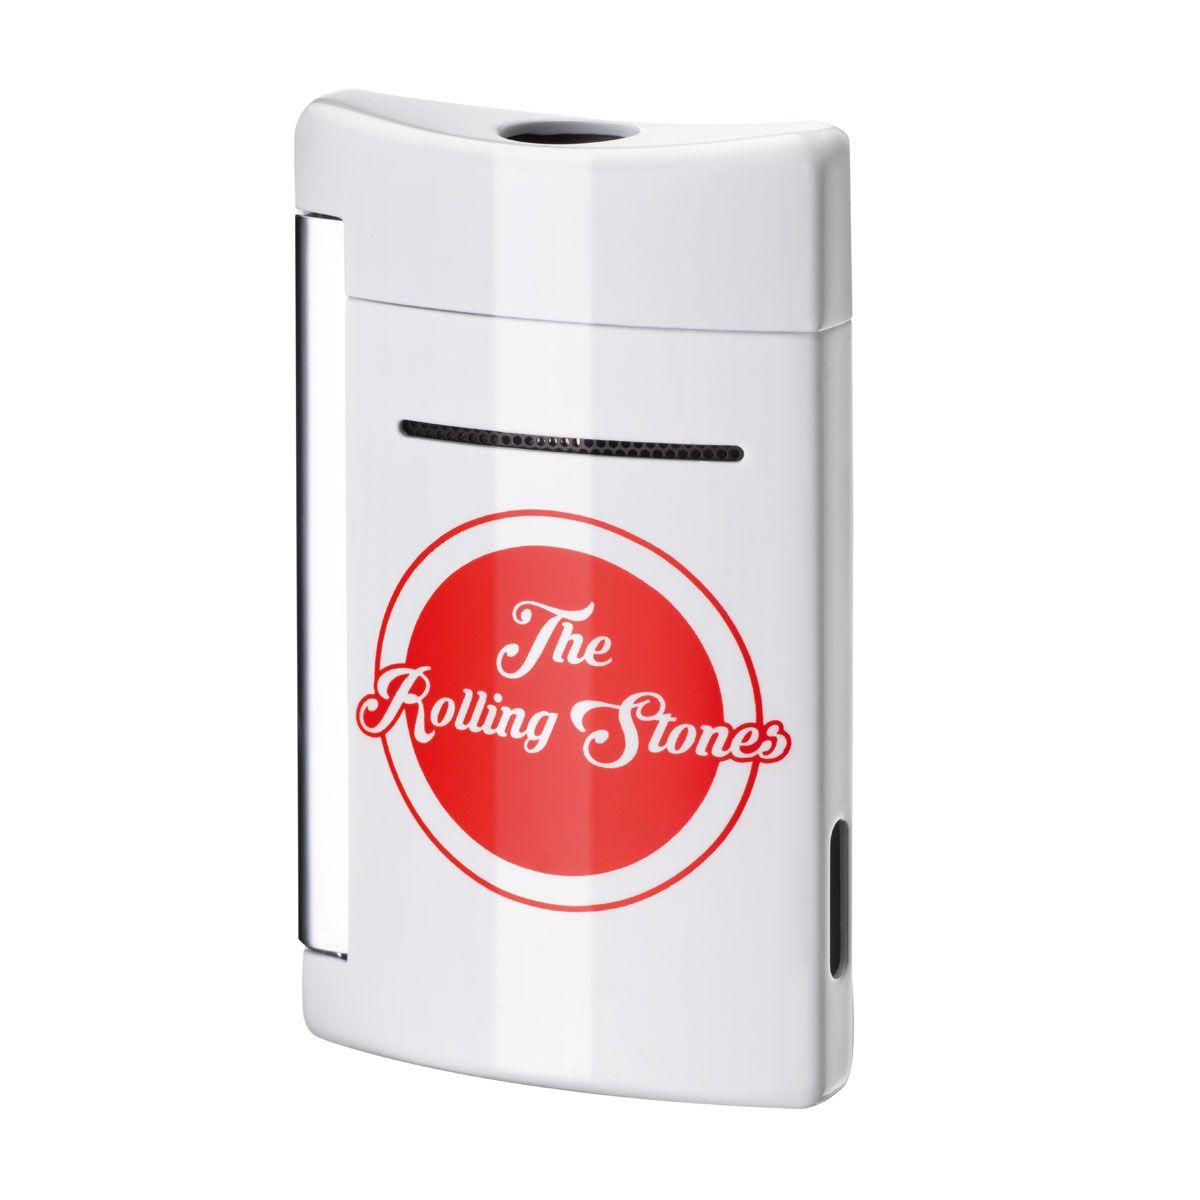 Lighter Logo - ST Dupont Rolling Stones MiniJet Lighter with Logo - White